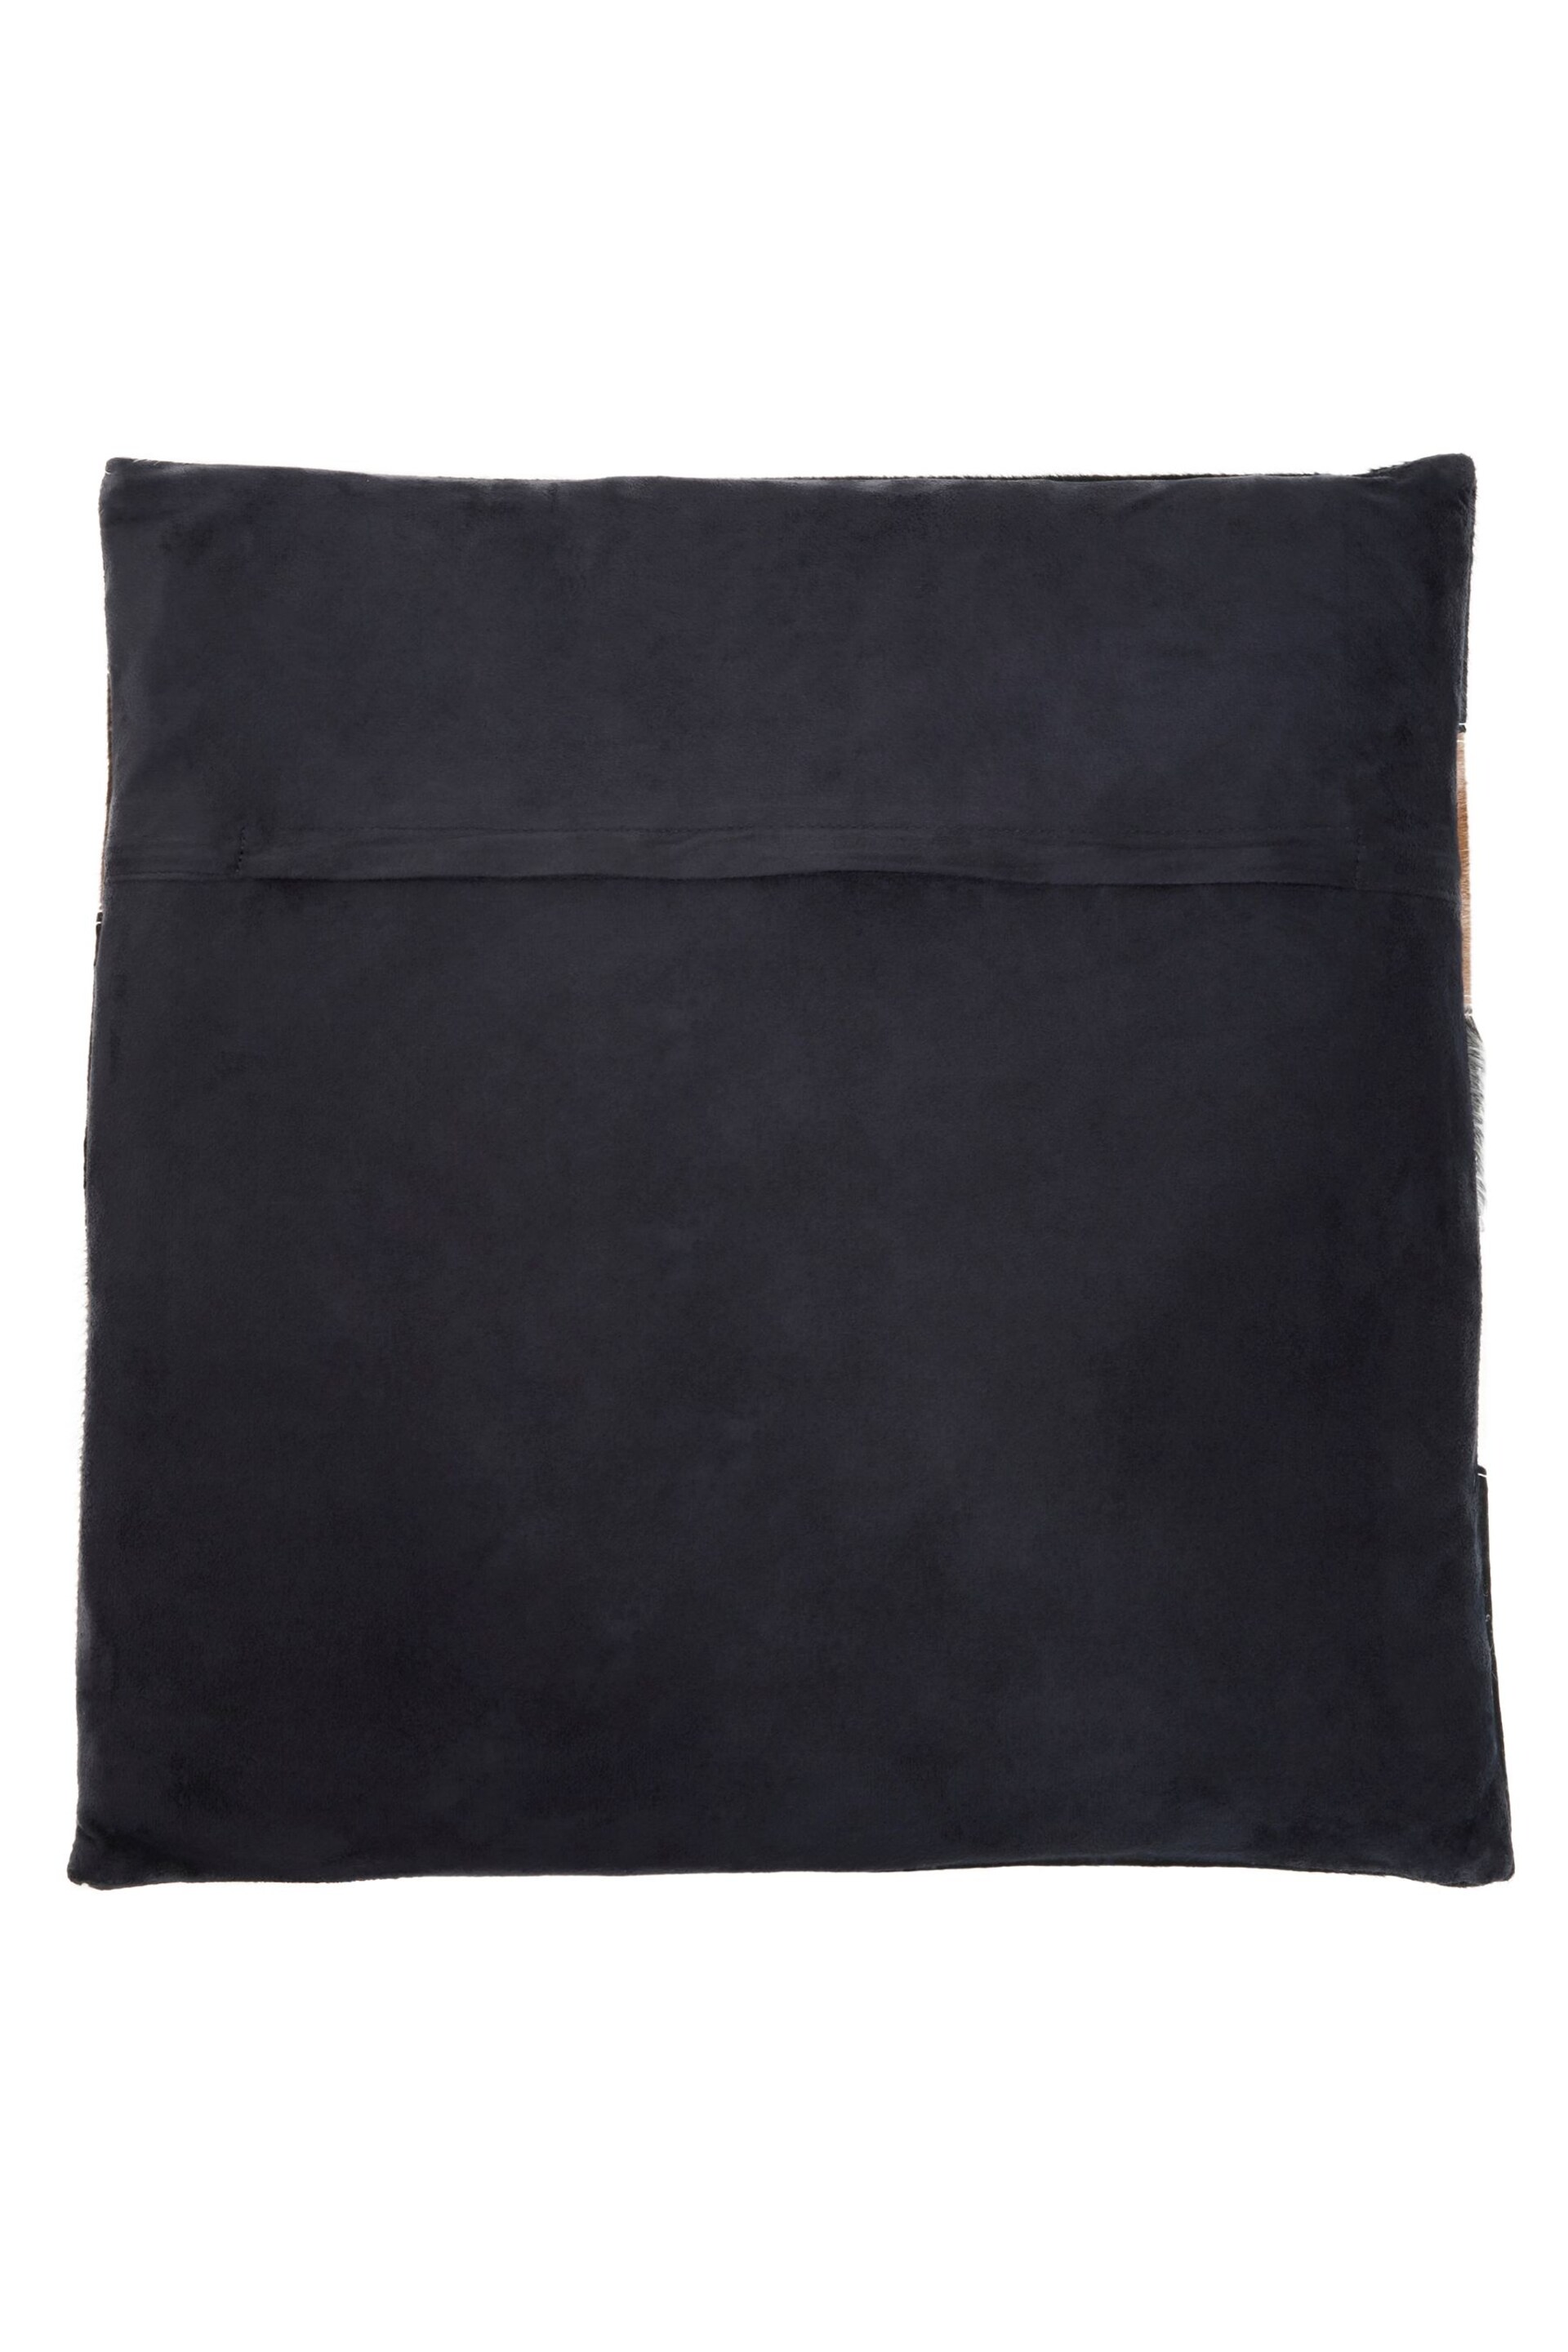 Fifty Five South Grey Safari Genuine Leather Cushion - Image 6 of 7